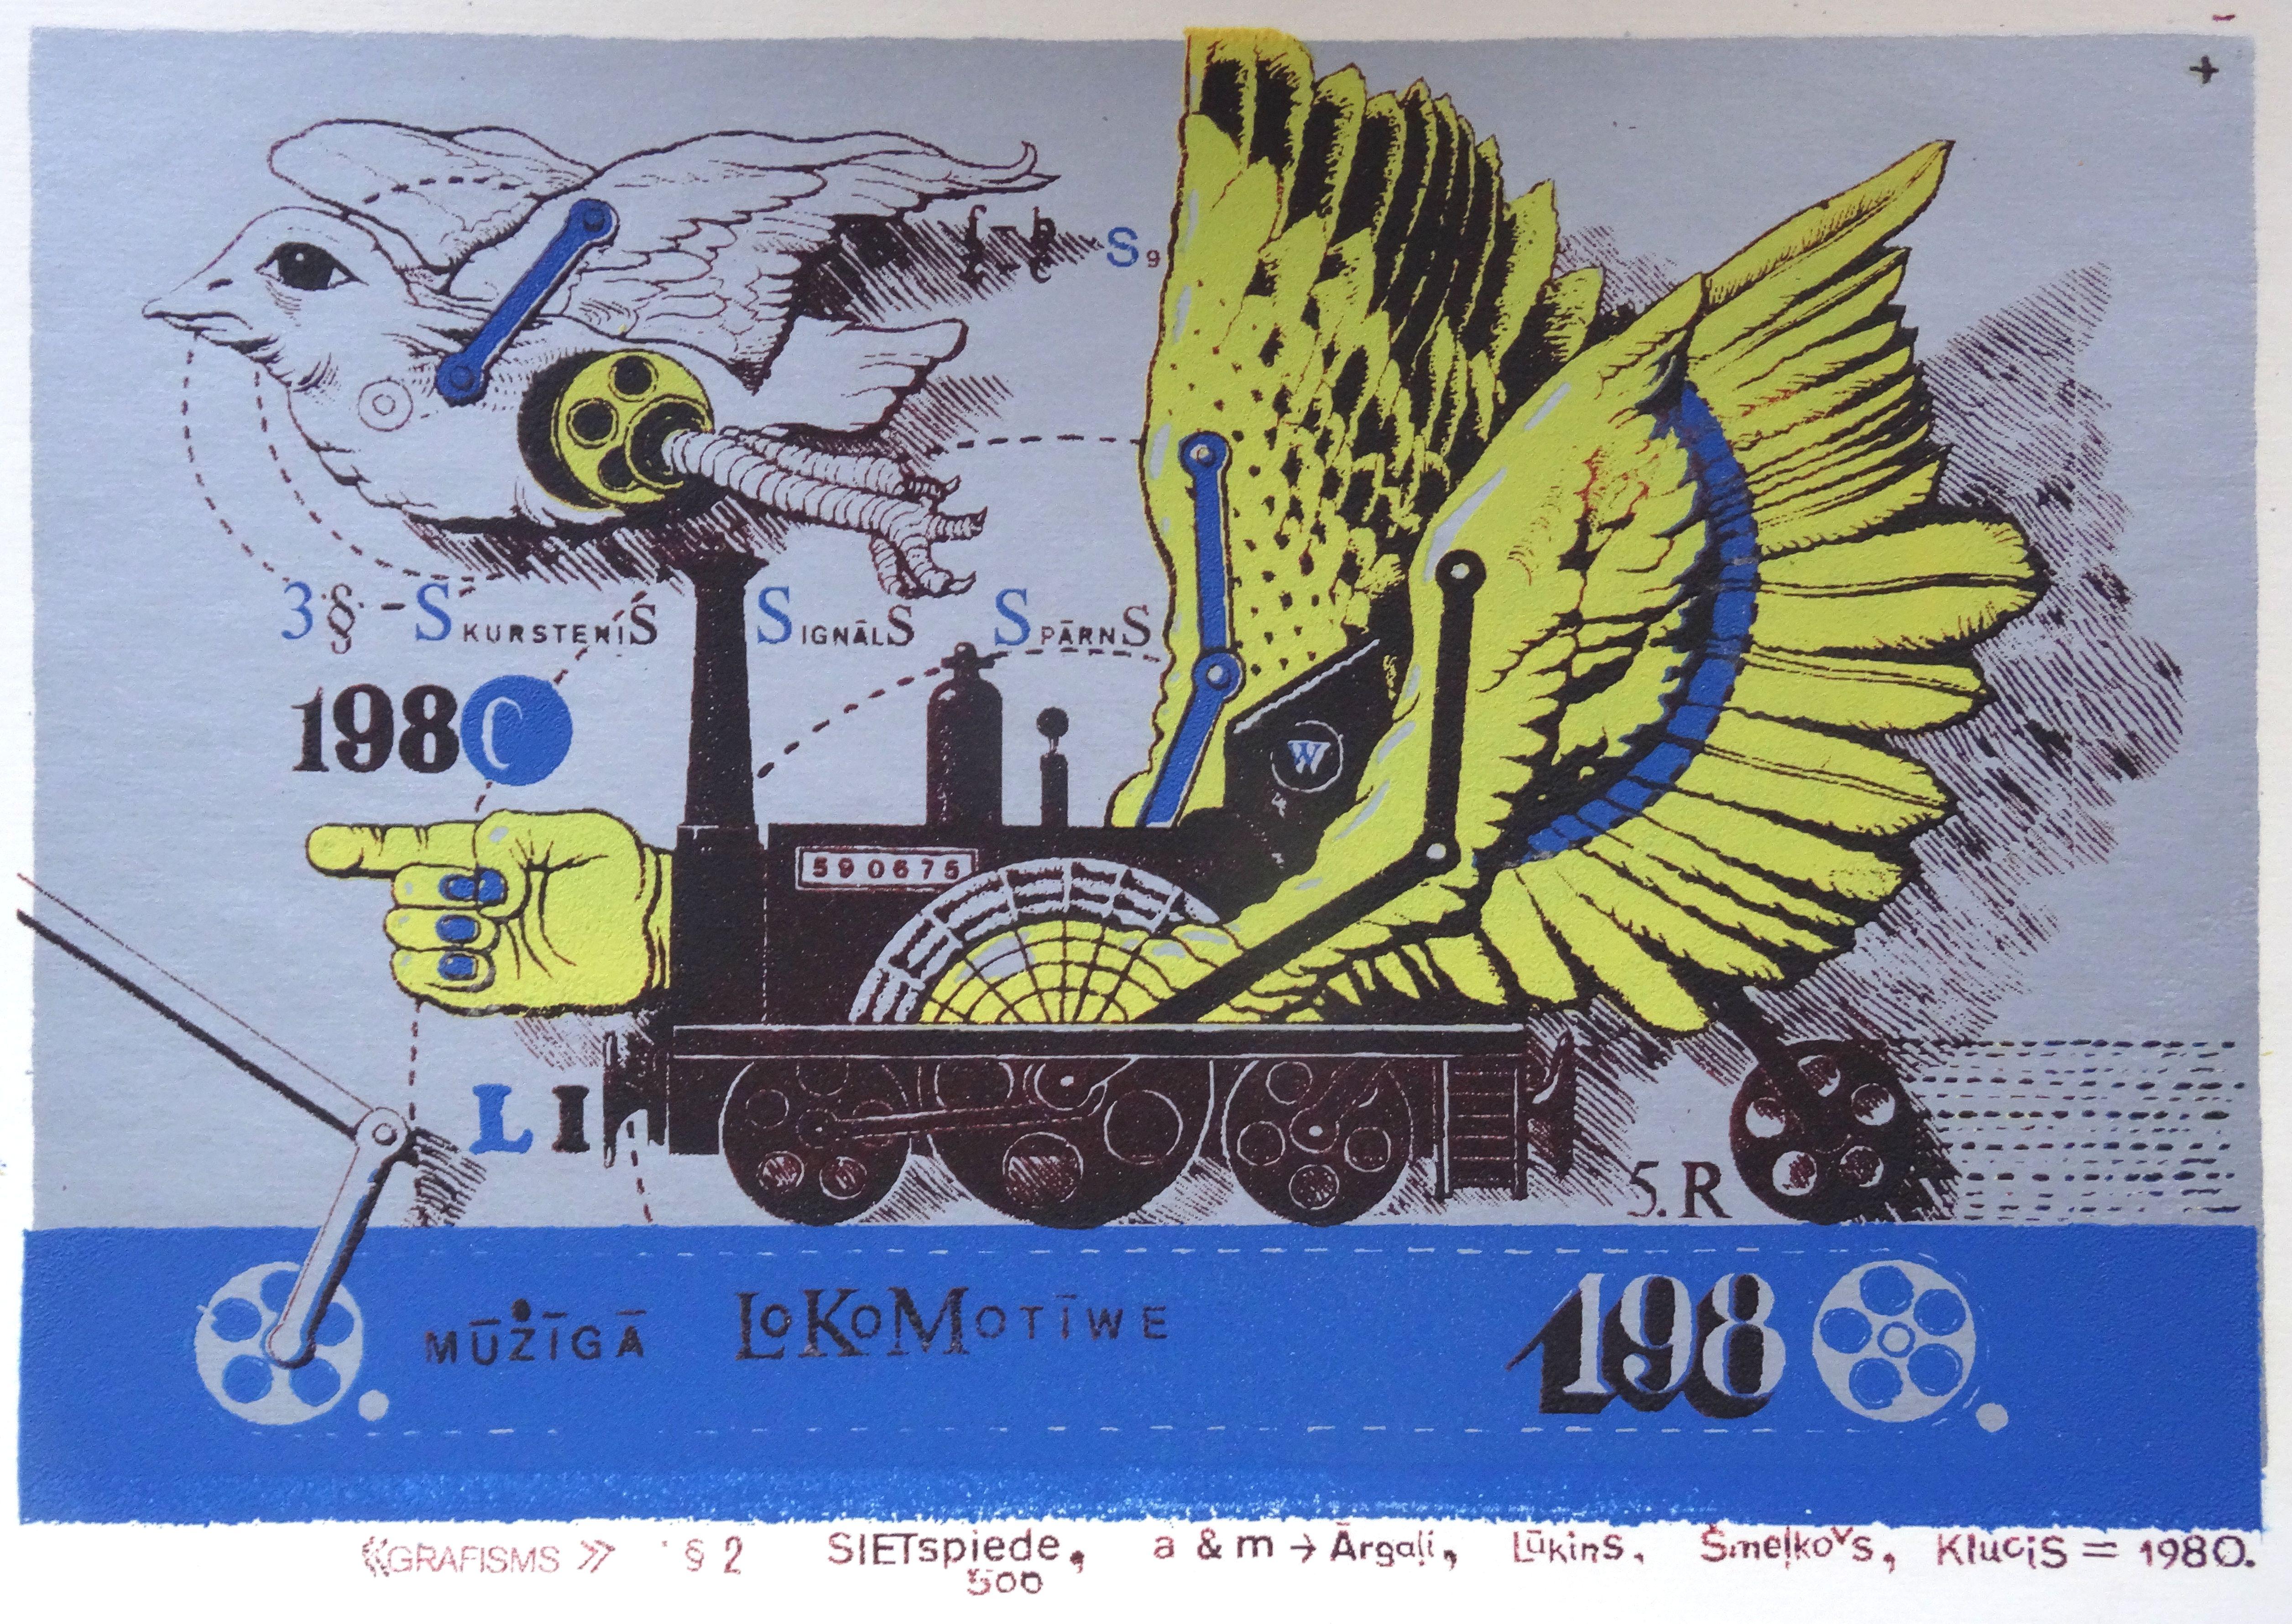 Graphisms & 2. 1980, paper, silk screen, 15x21 cm